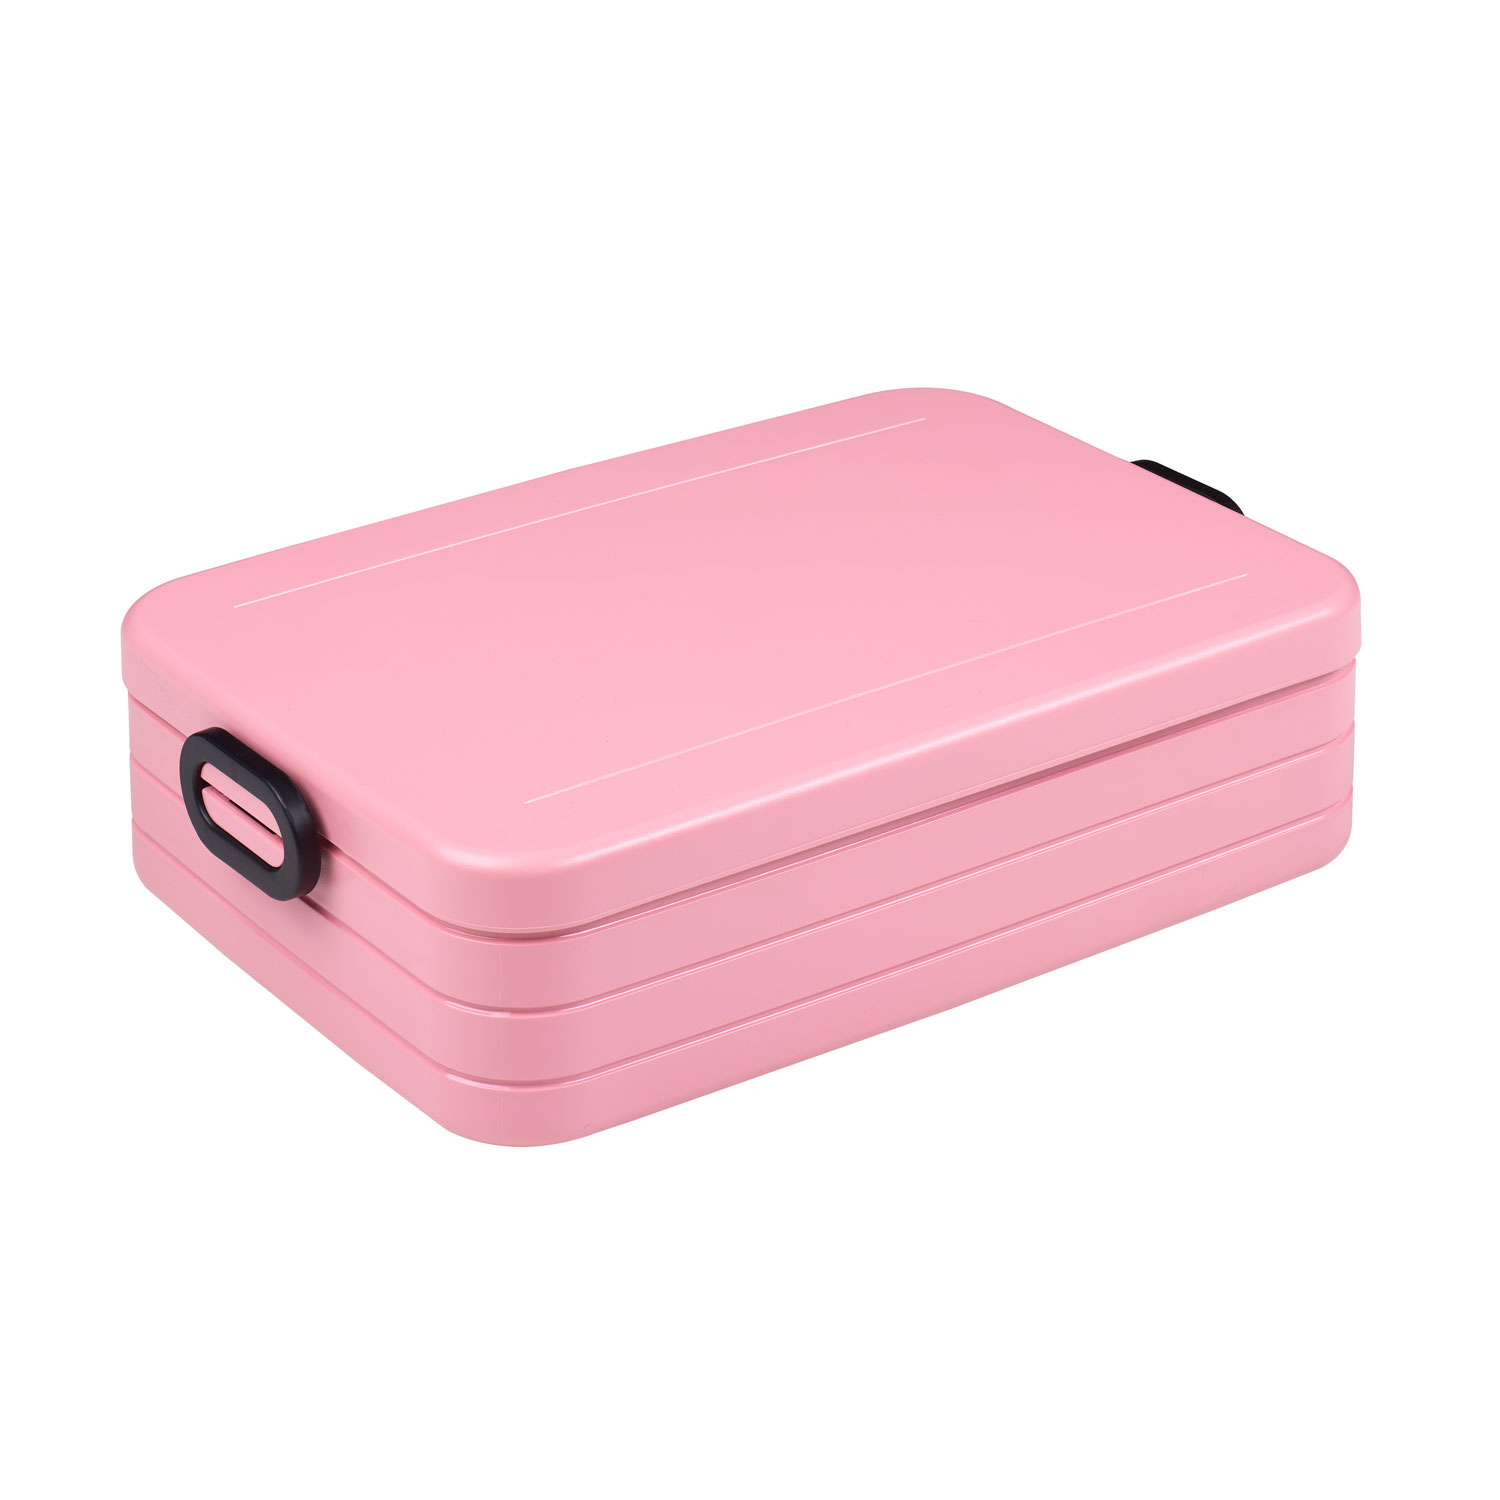 Mepal Lunchbox Take a Break Large - Nordic Pink